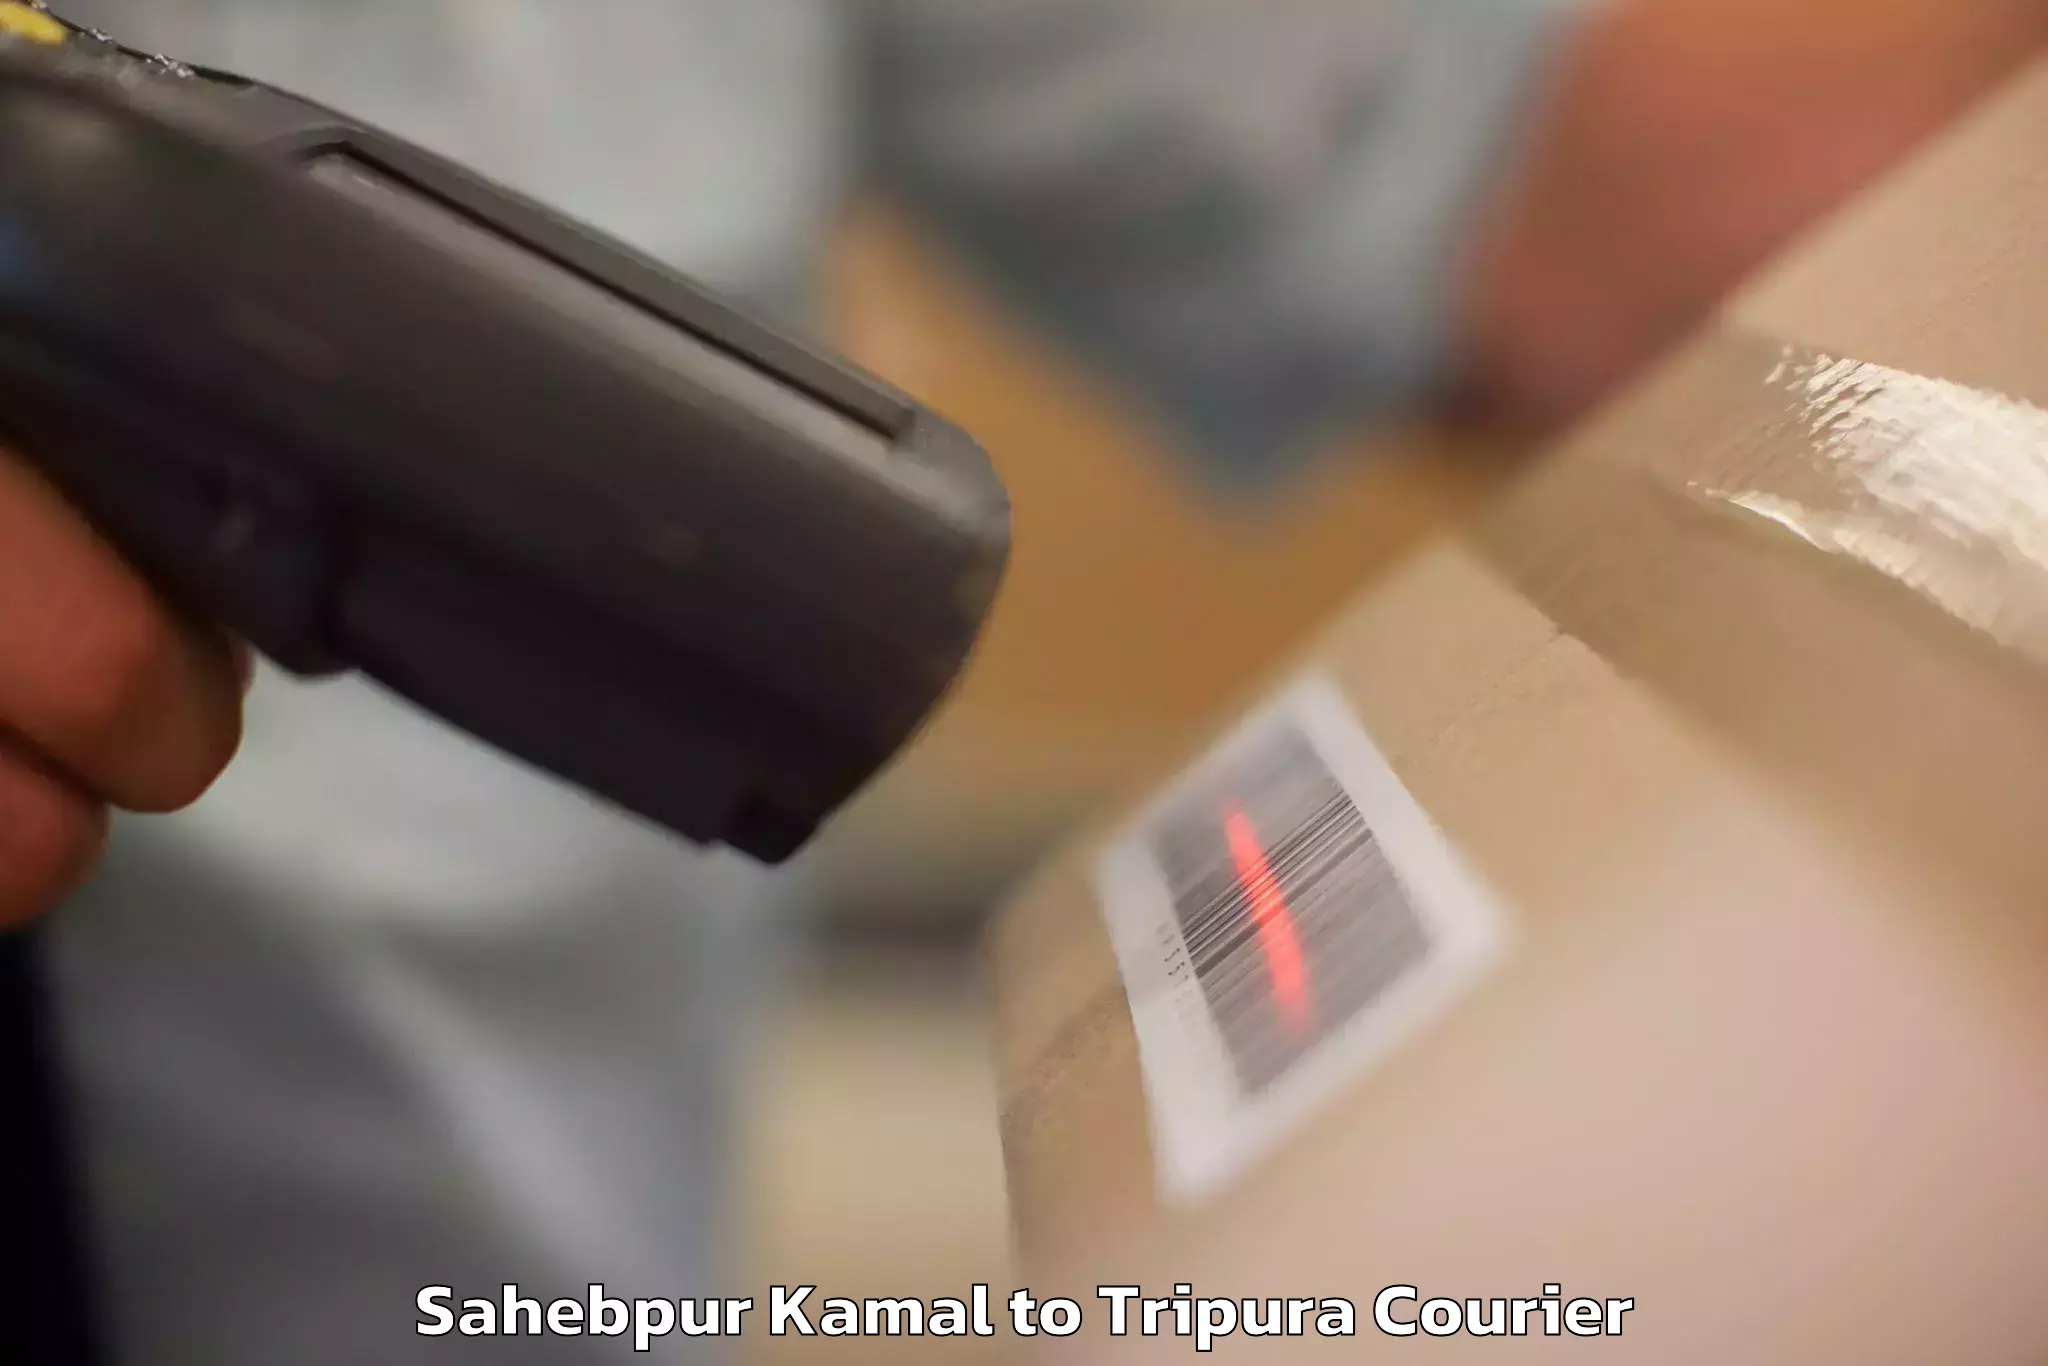 Baggage relocation service Sahebpur Kamal to Tripura